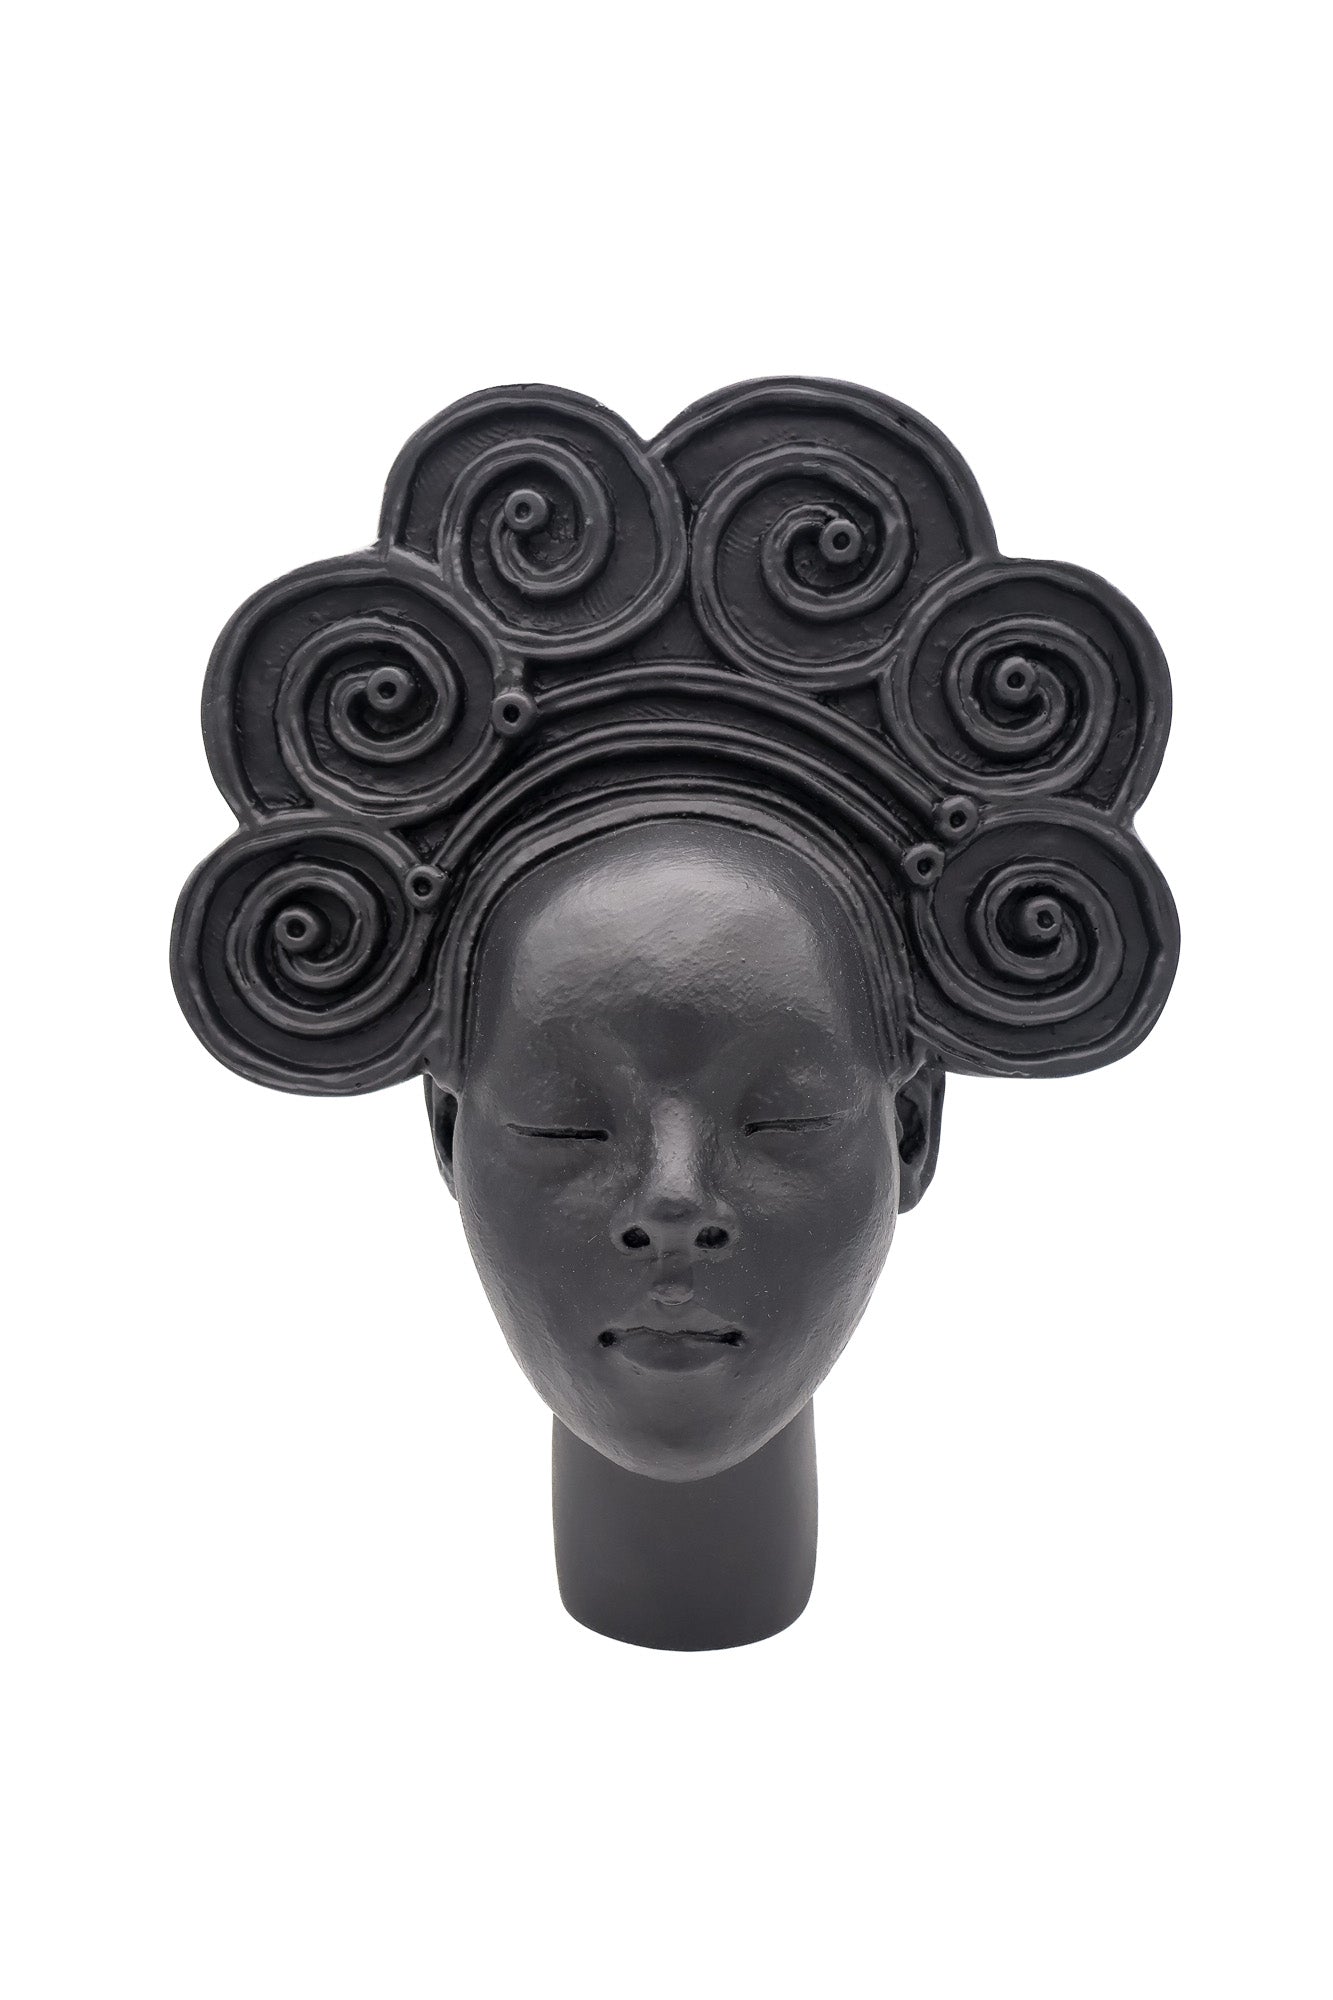 Vientos Sculpture Black by Agave